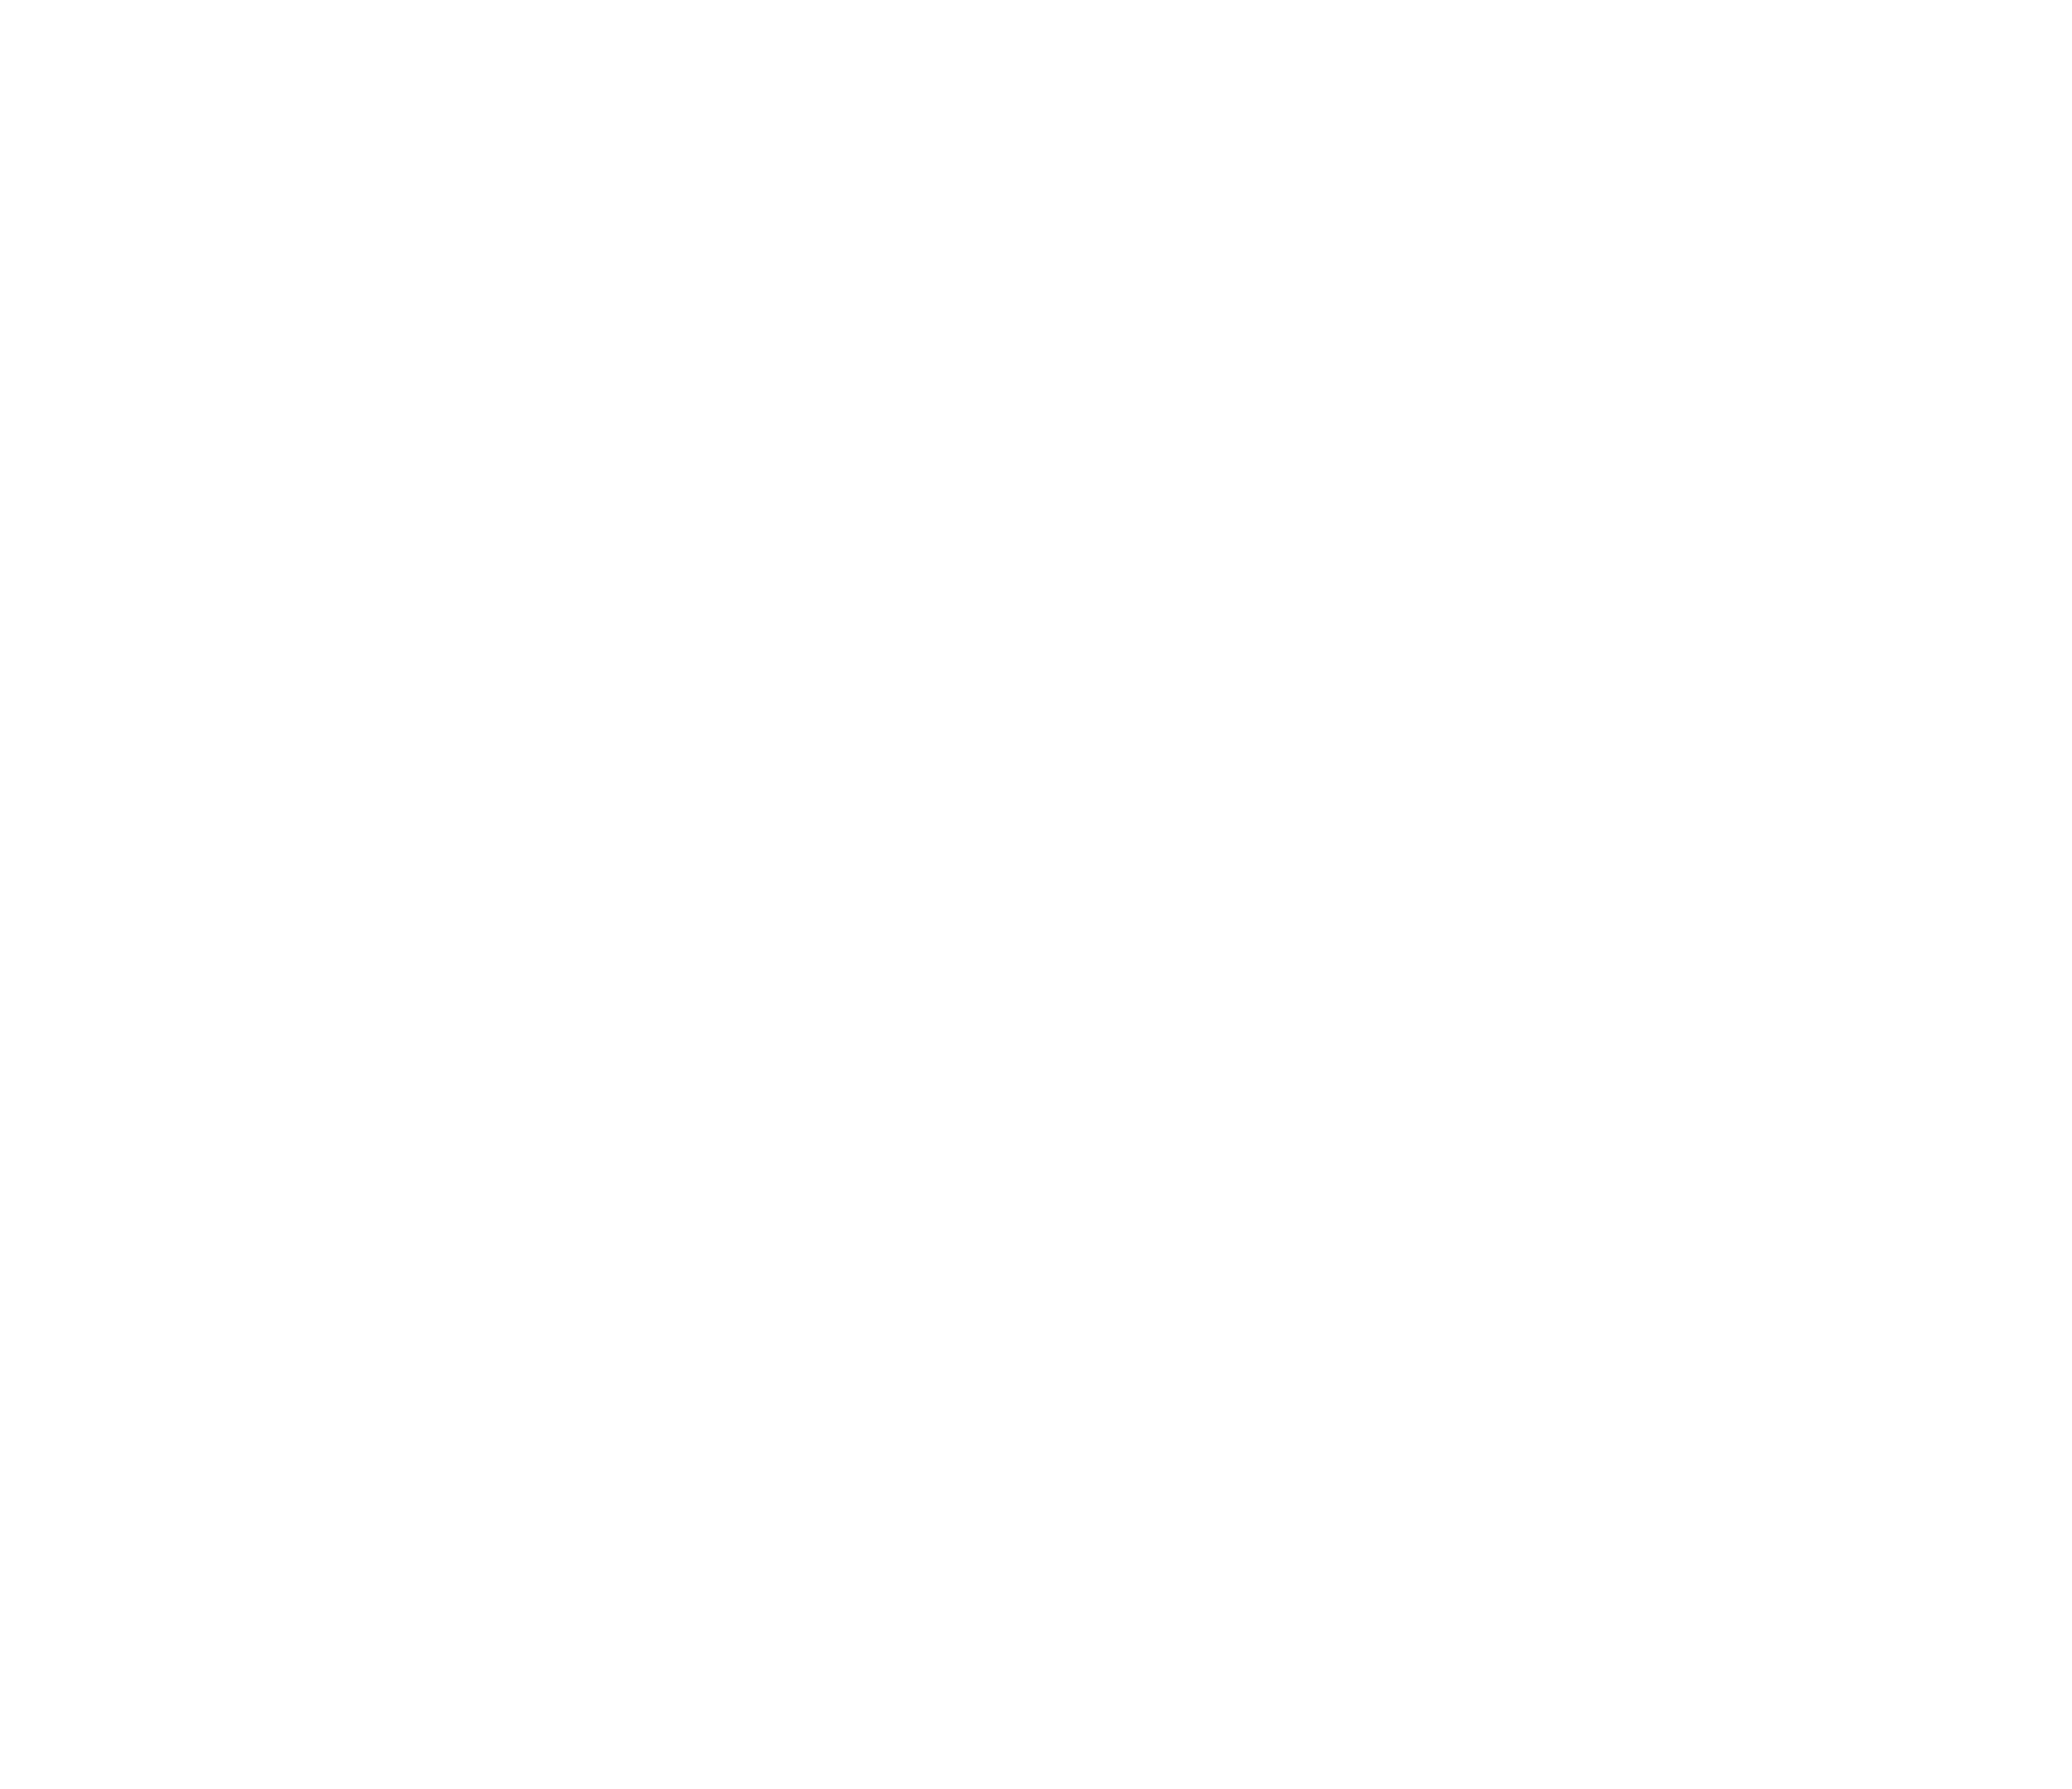 Olive Ewe Productions